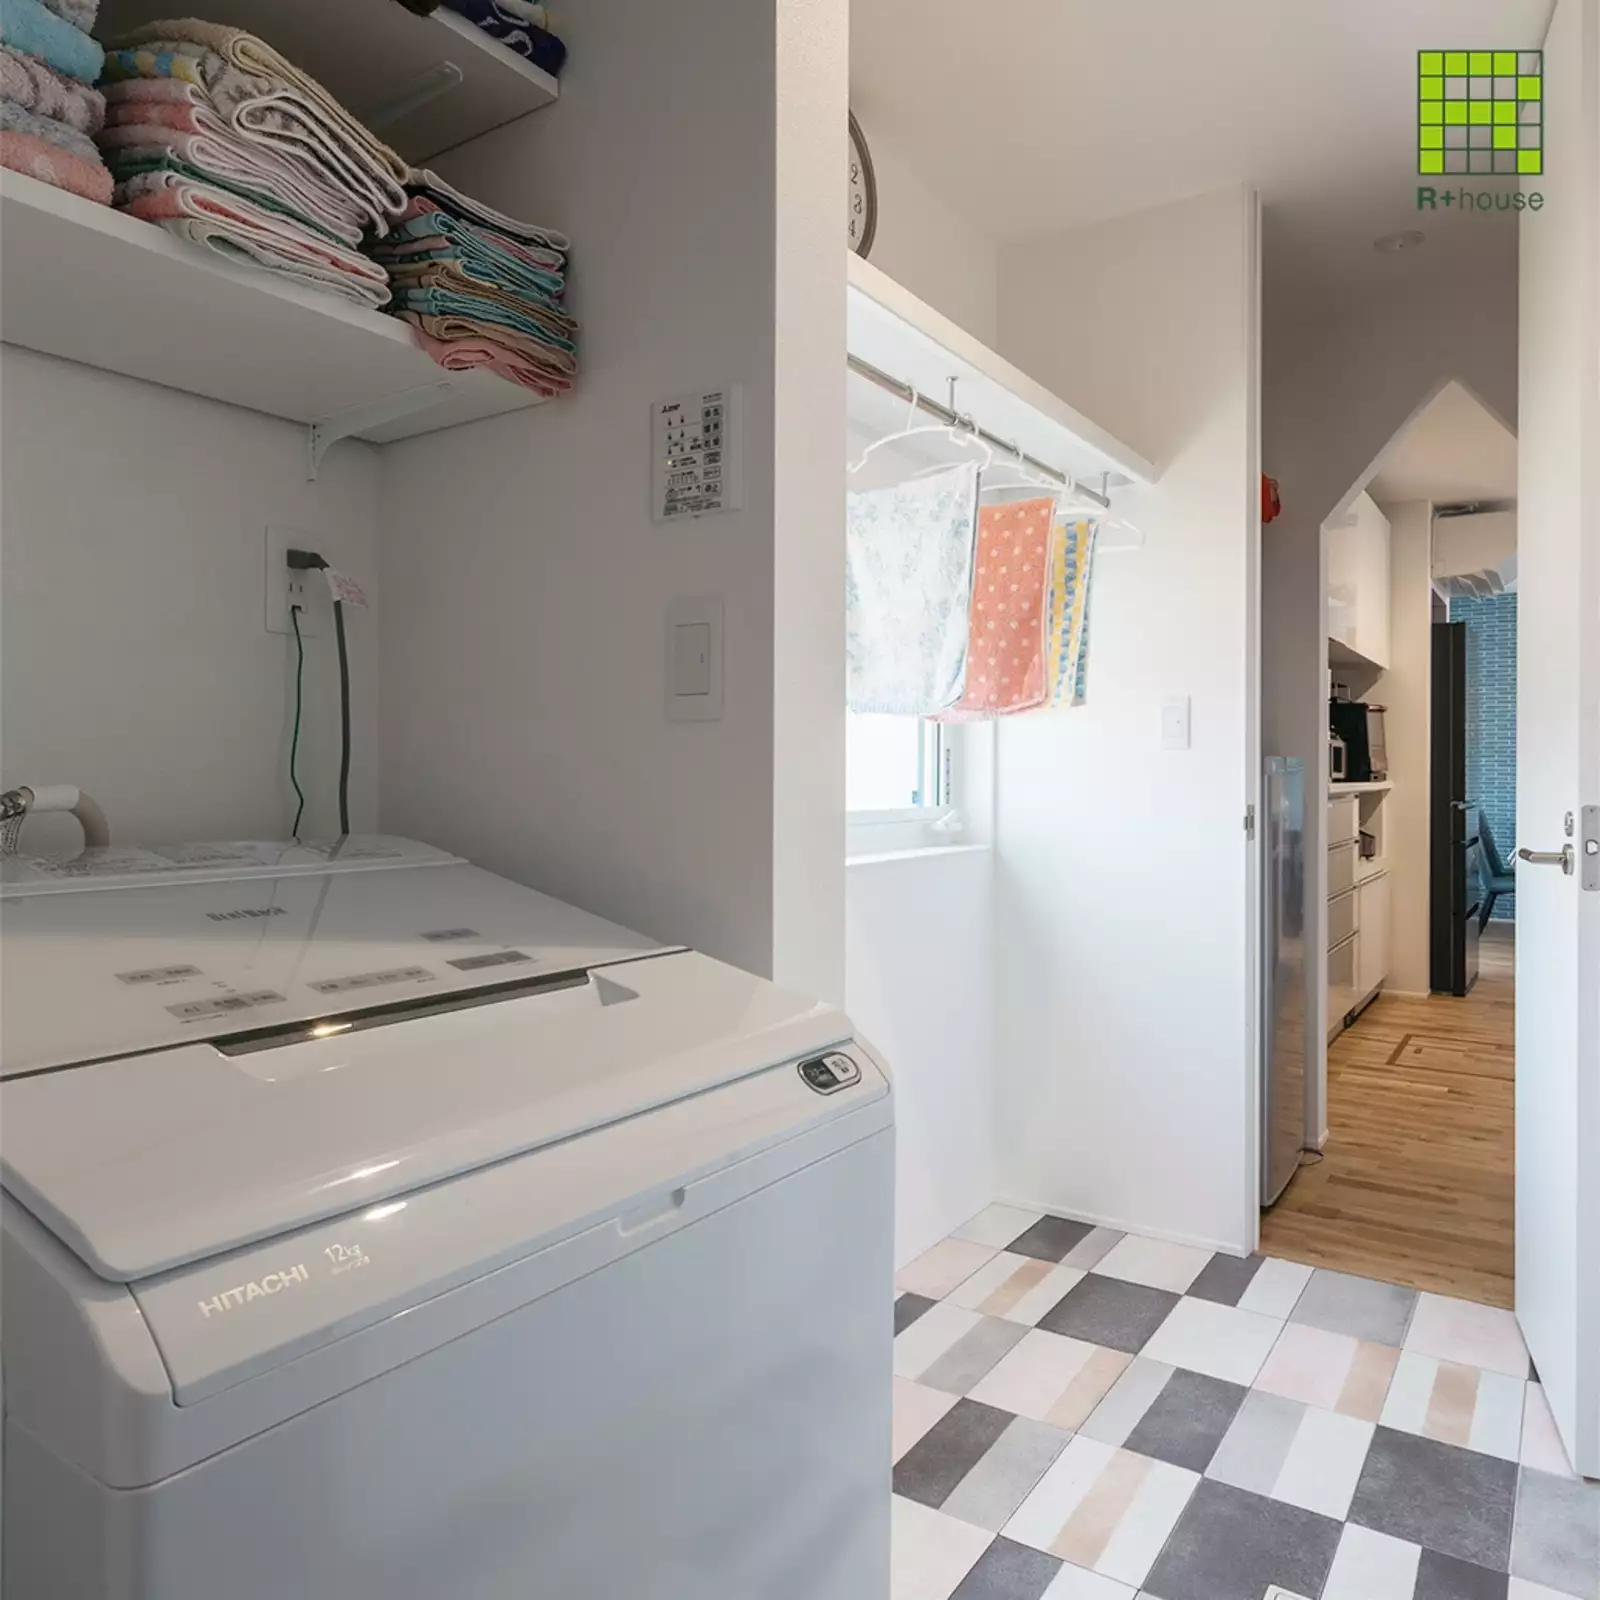 R+houseの物件の脱衣室の写真です。洗濯機と室内干し用のポールを設置してある。